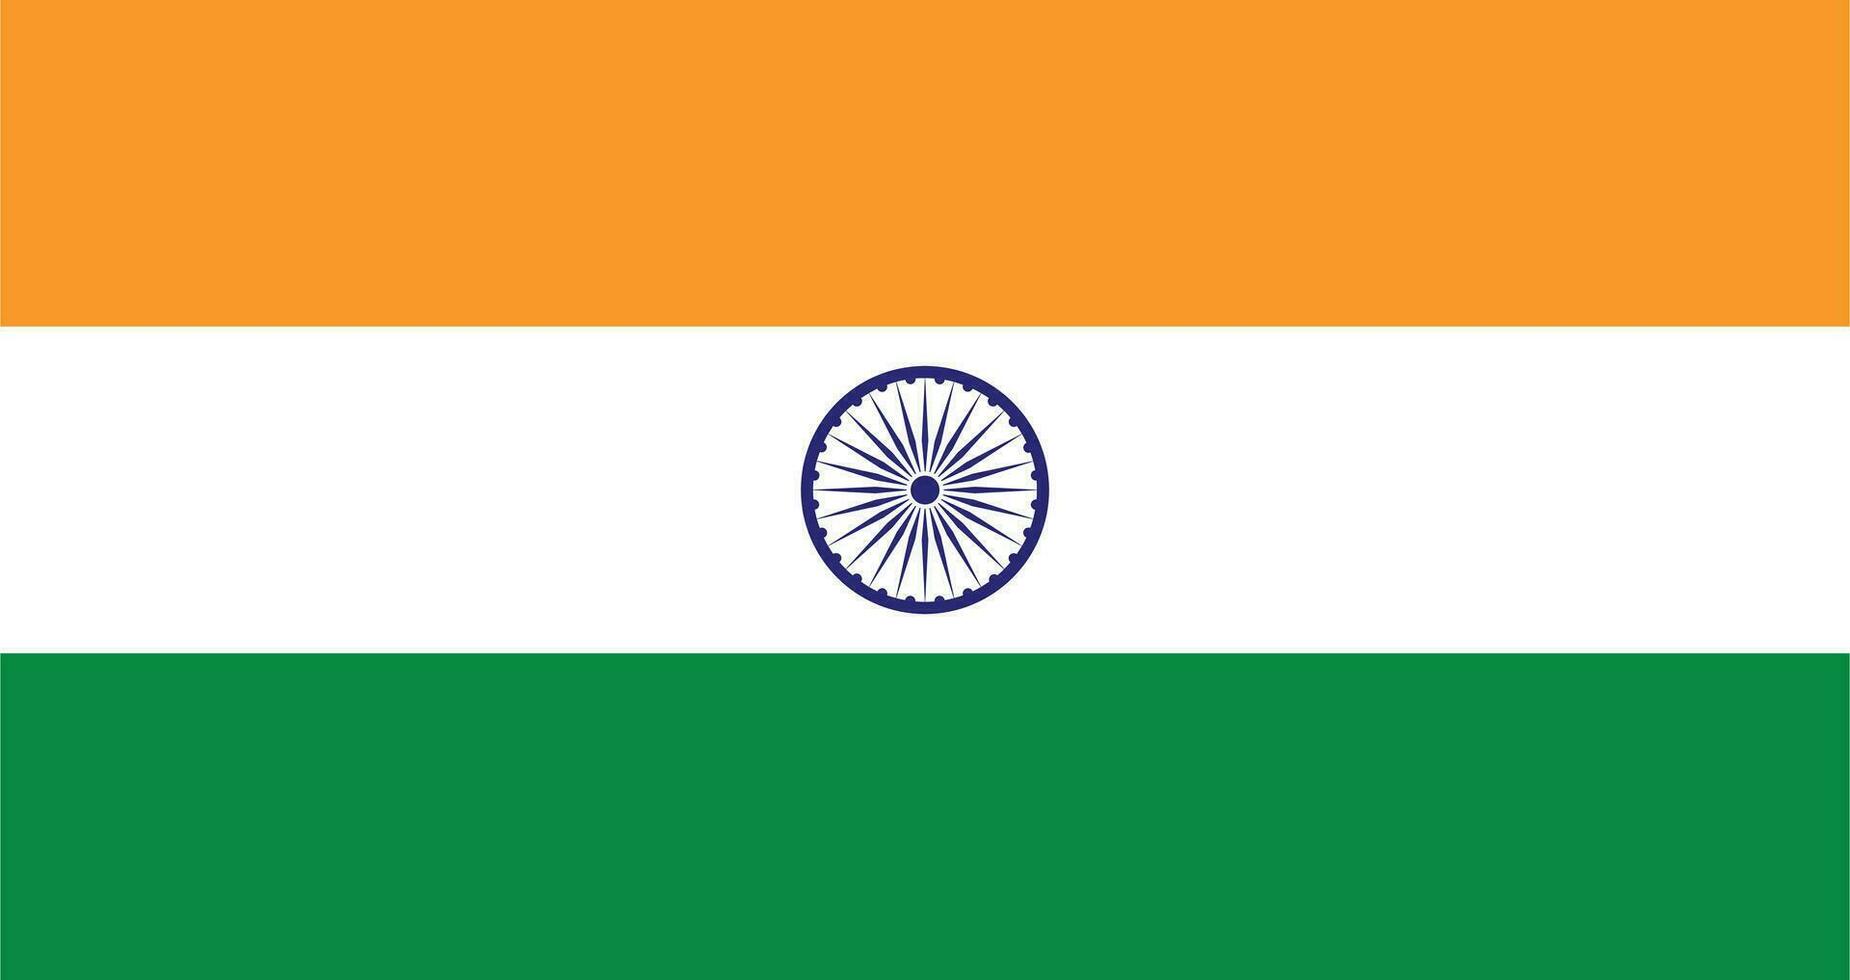 Flat Illustration of India flag. India flag design. vector